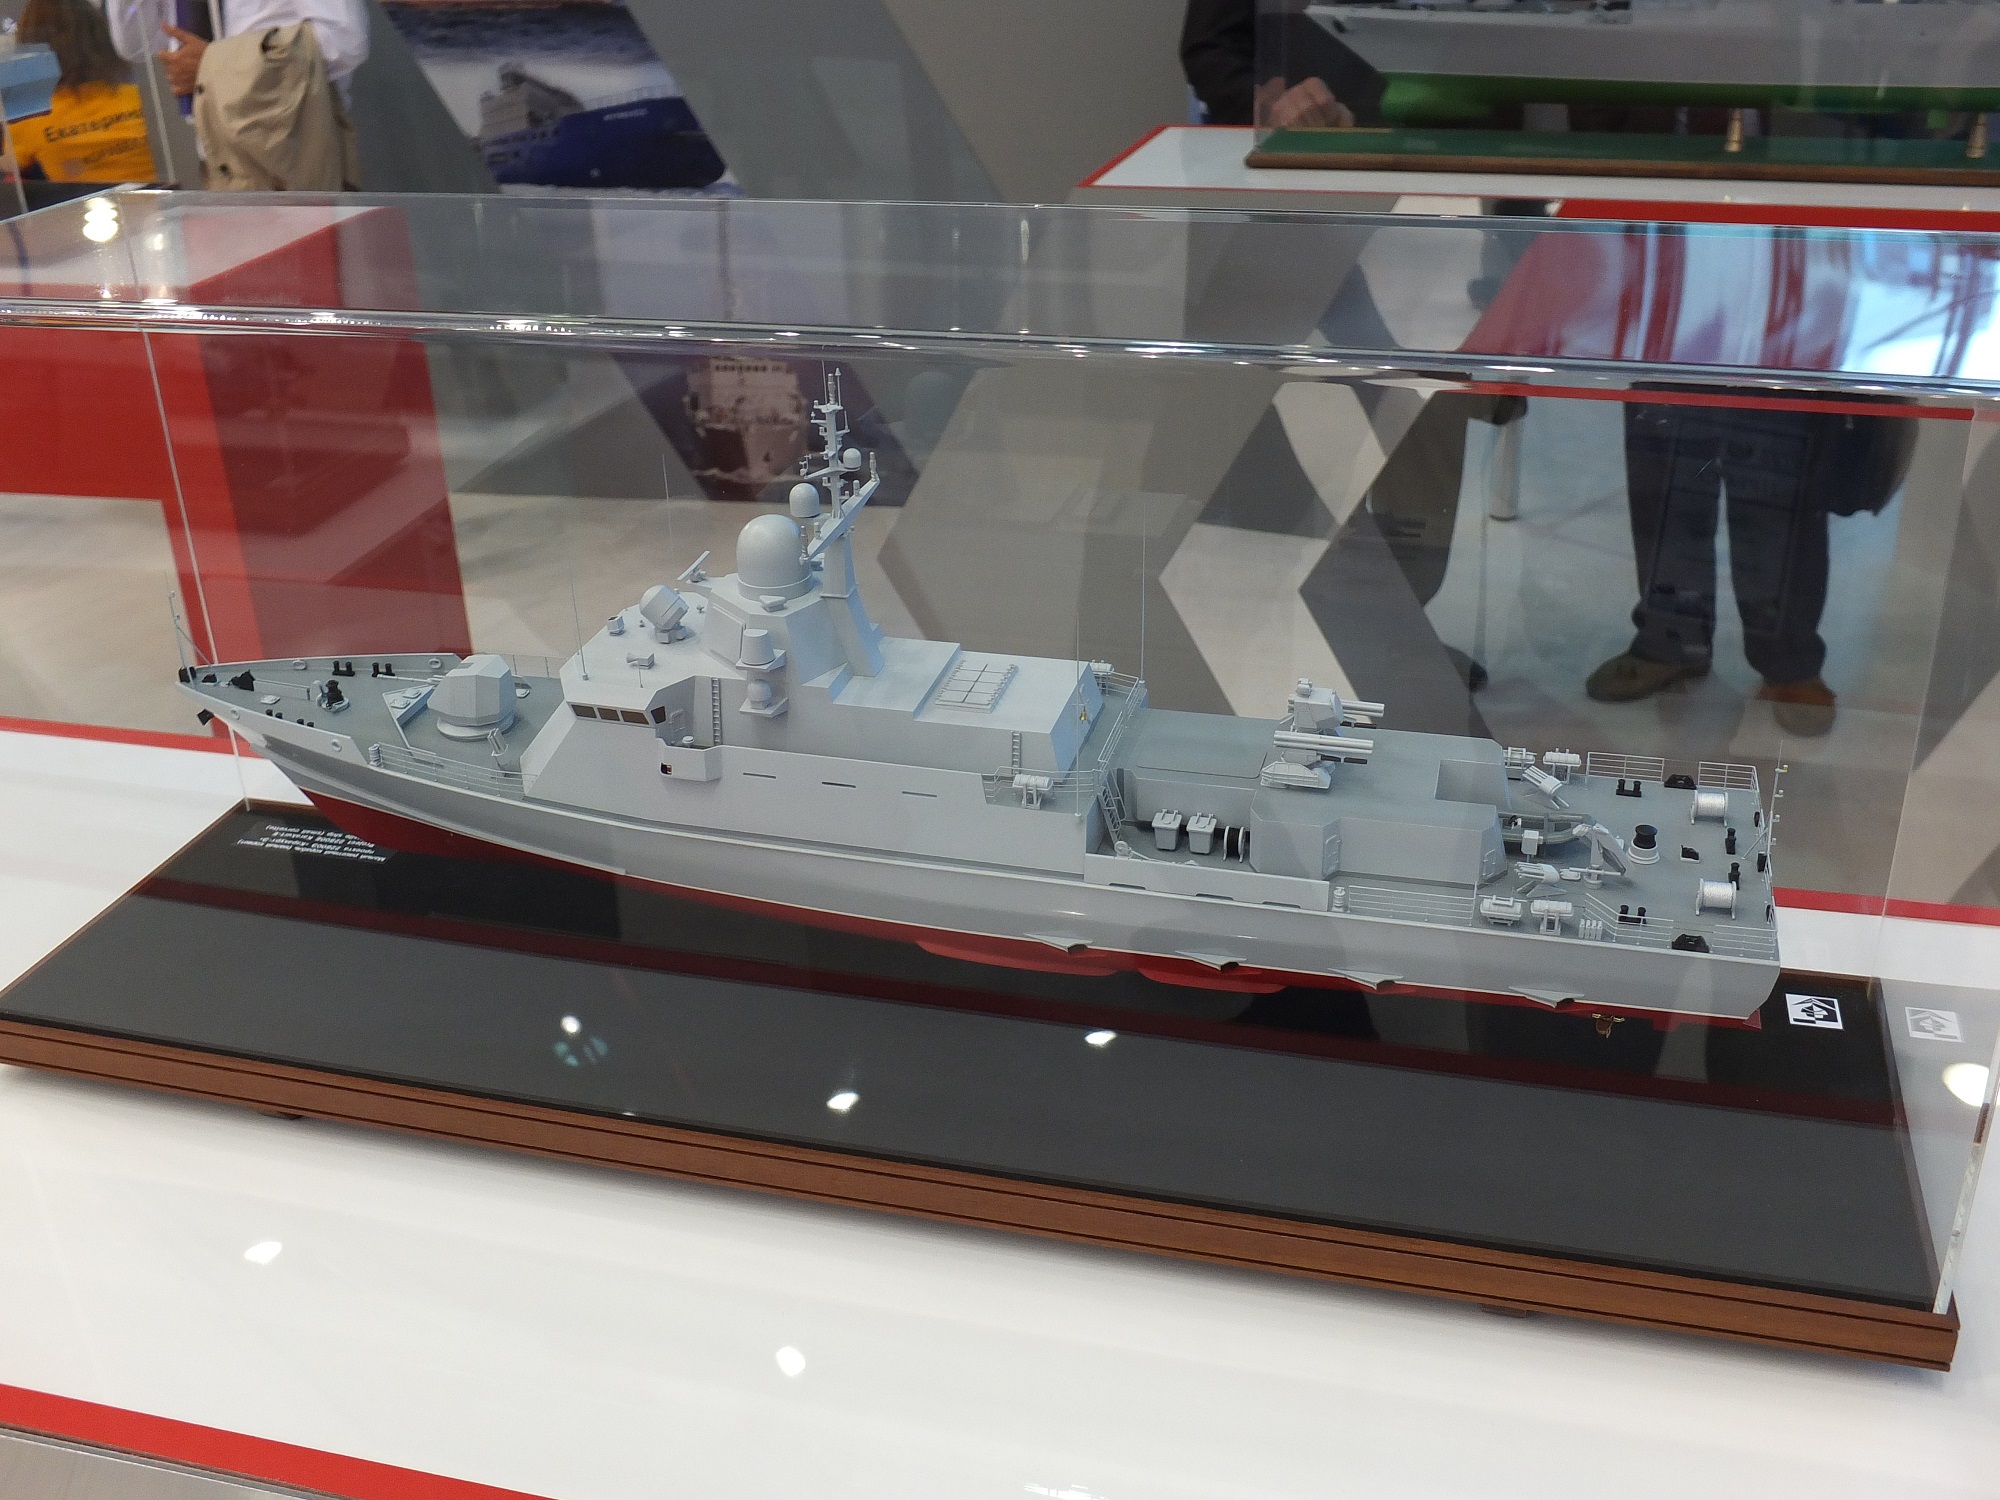 Model okrętu proj. 22800 Karakurt z systemem Pancyr-M. Fot. Defence24.pl